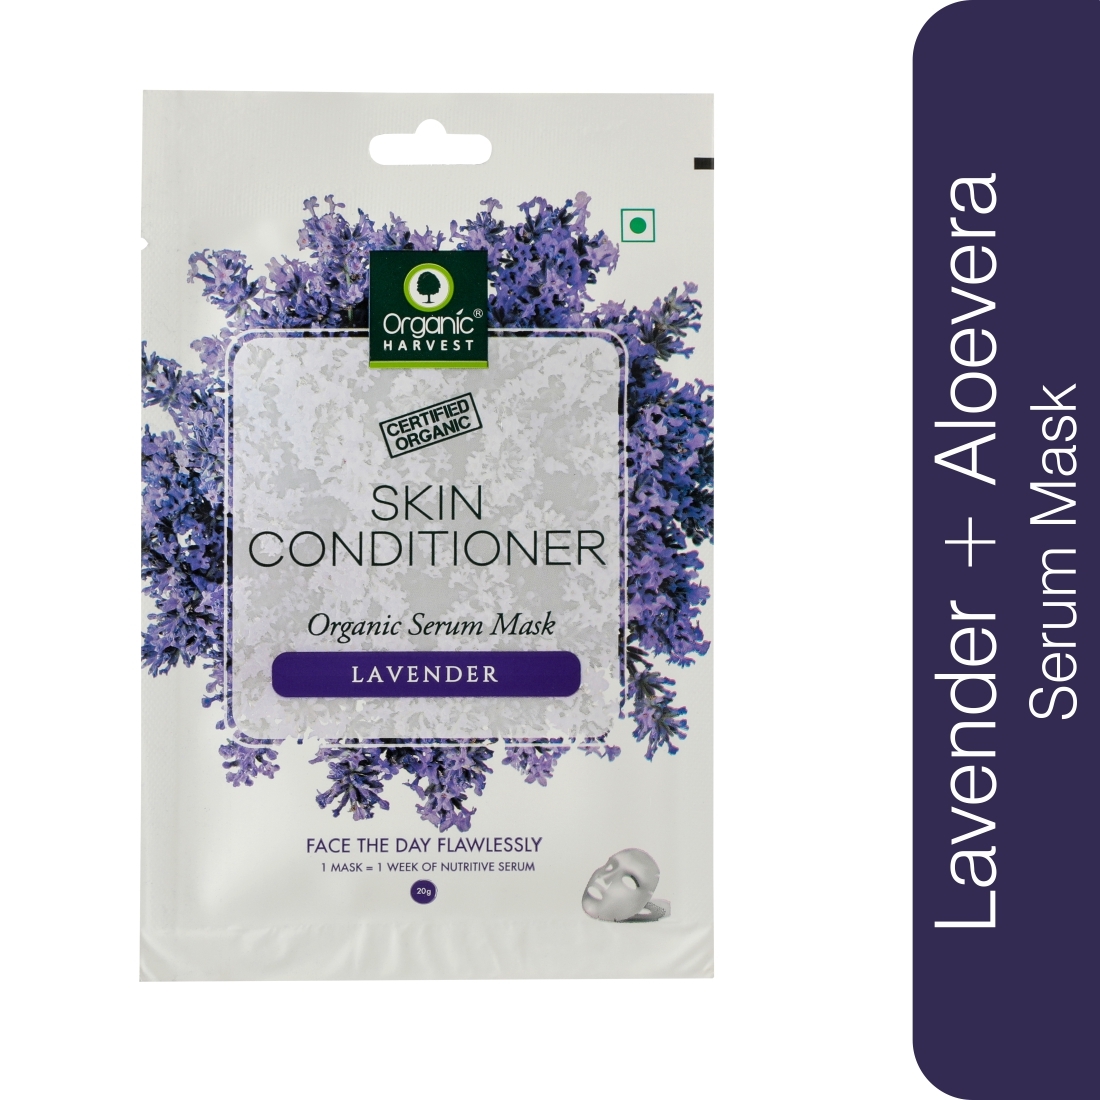 Organic Harvest | Organic Harvest Skin Conditioner Organic Serum Mask - Lavender , 20gm